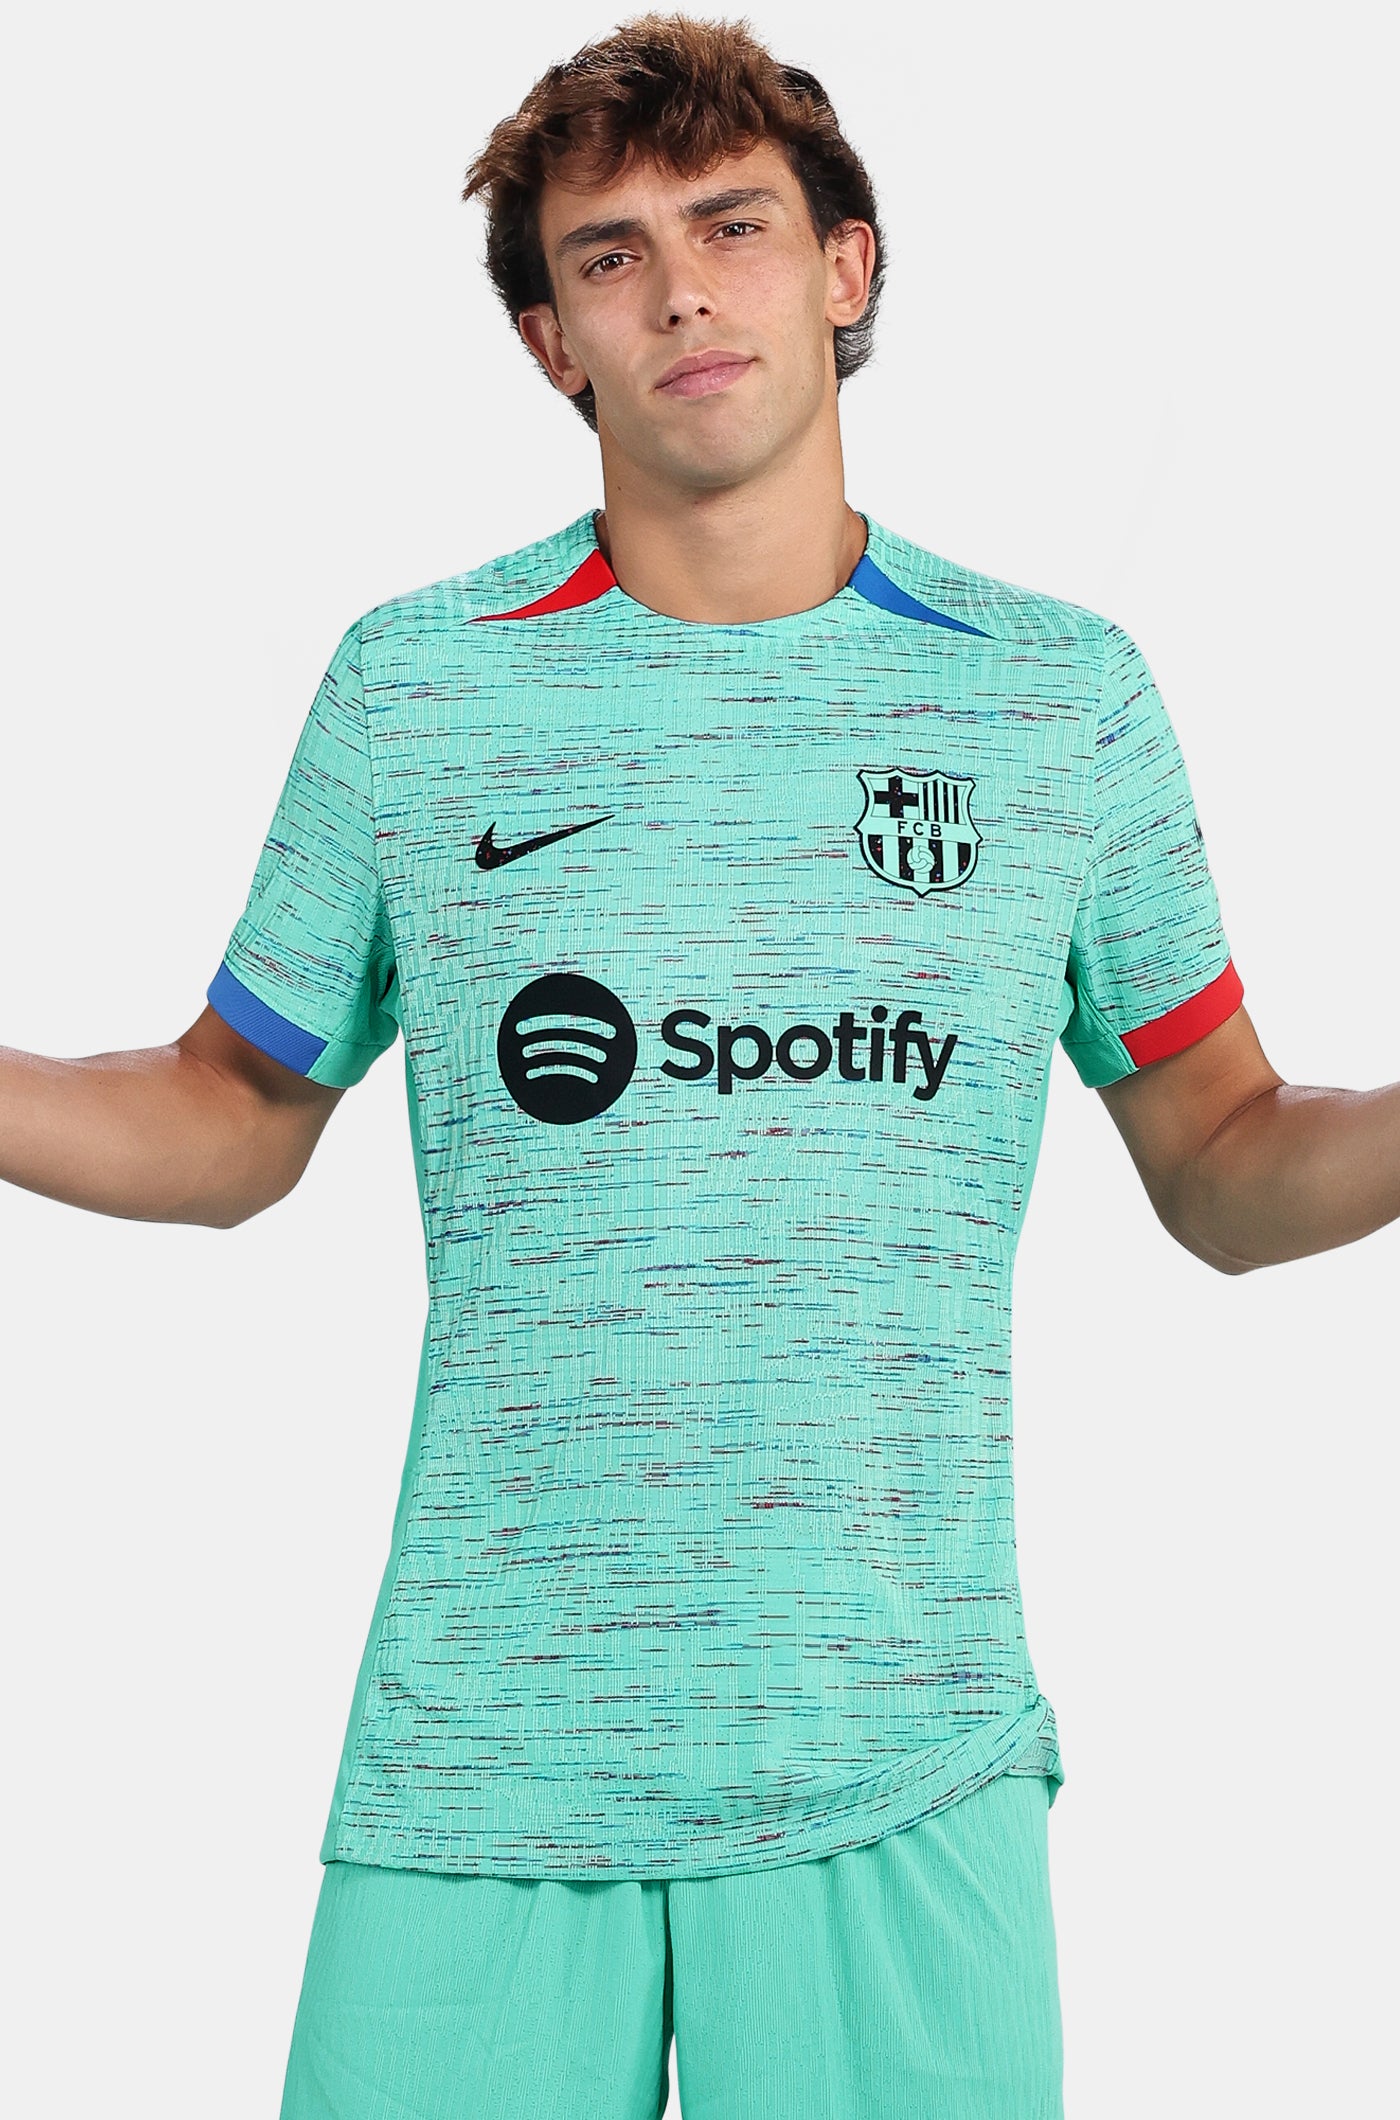 UCL FC Barcelona third shirt 23/24 Player’s Edition - JOÃO FELIX